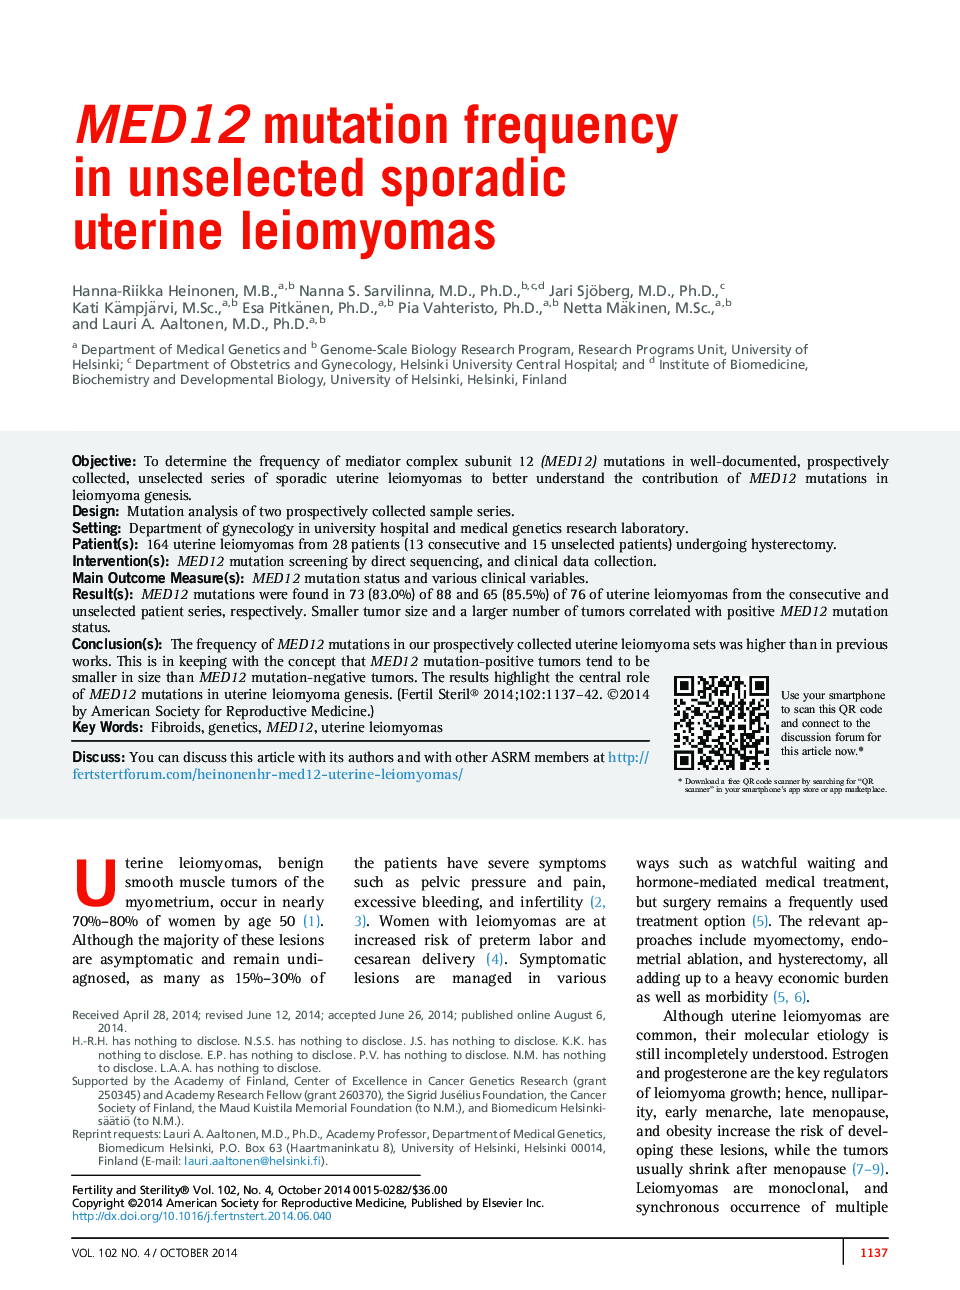 MED12 mutation frequency in unselected sporadic uterine leiomyomas